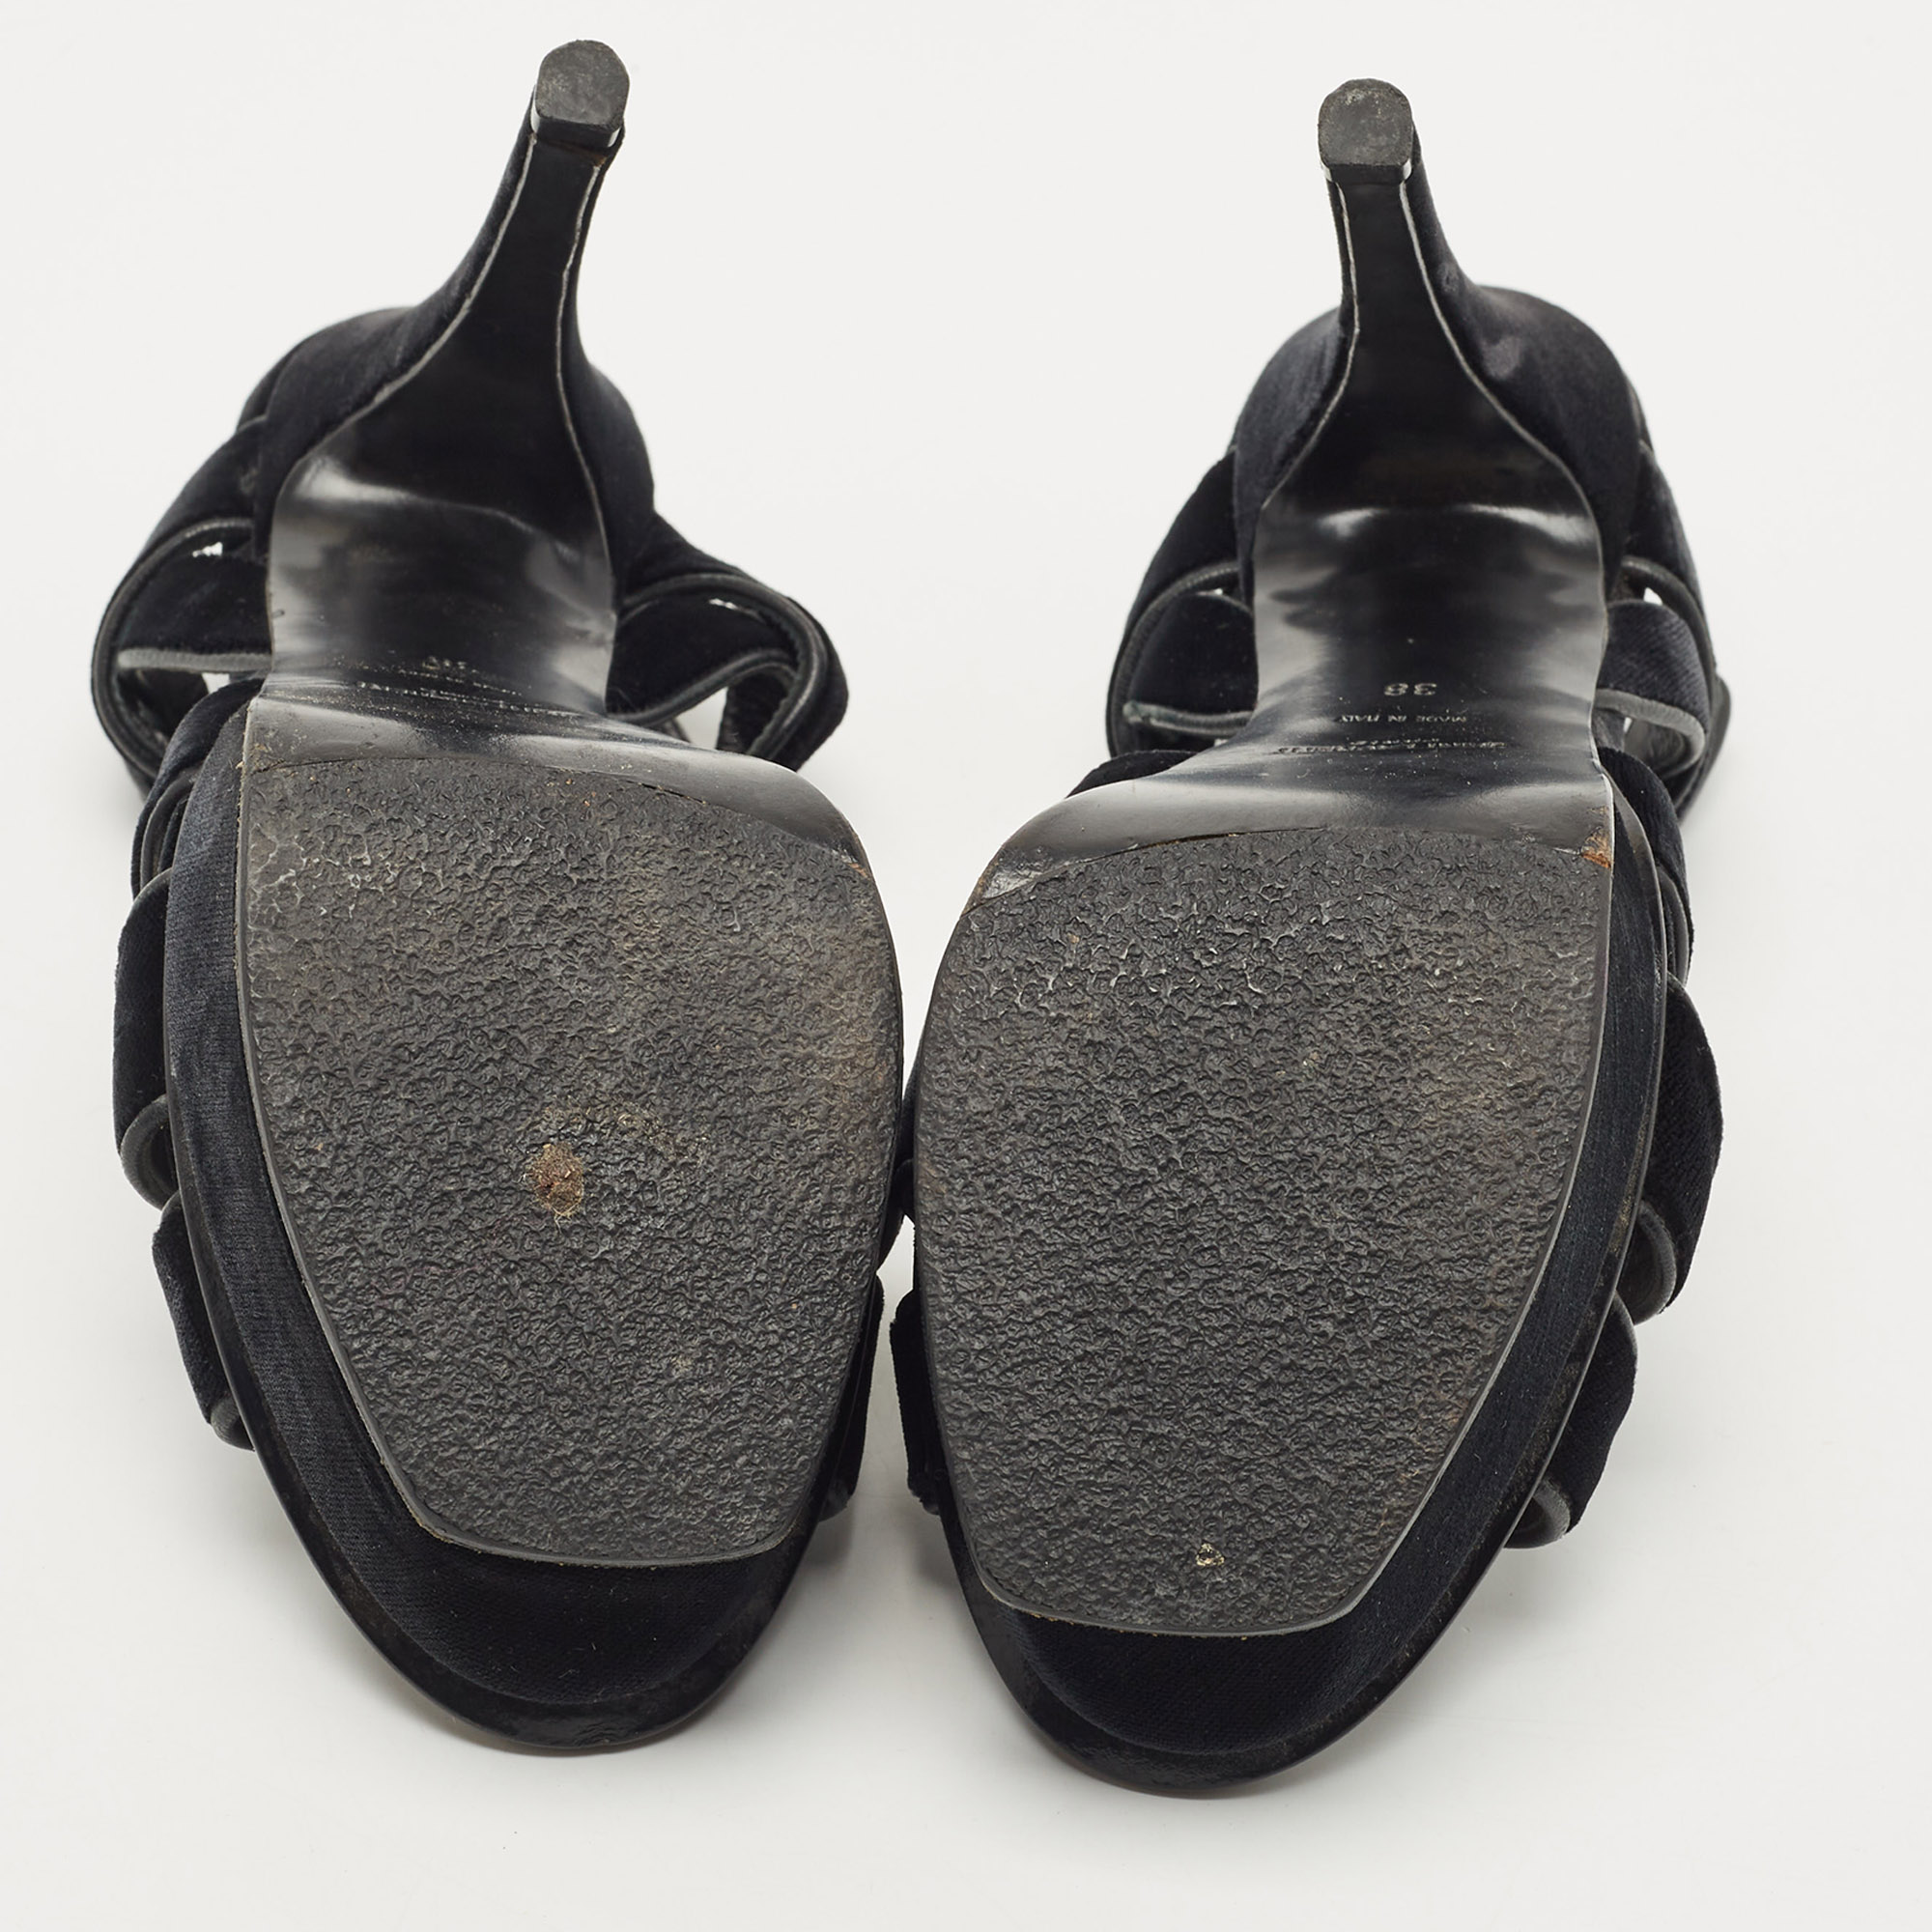 Saint Laurent Black Velvet Tribute Sandals Size 38